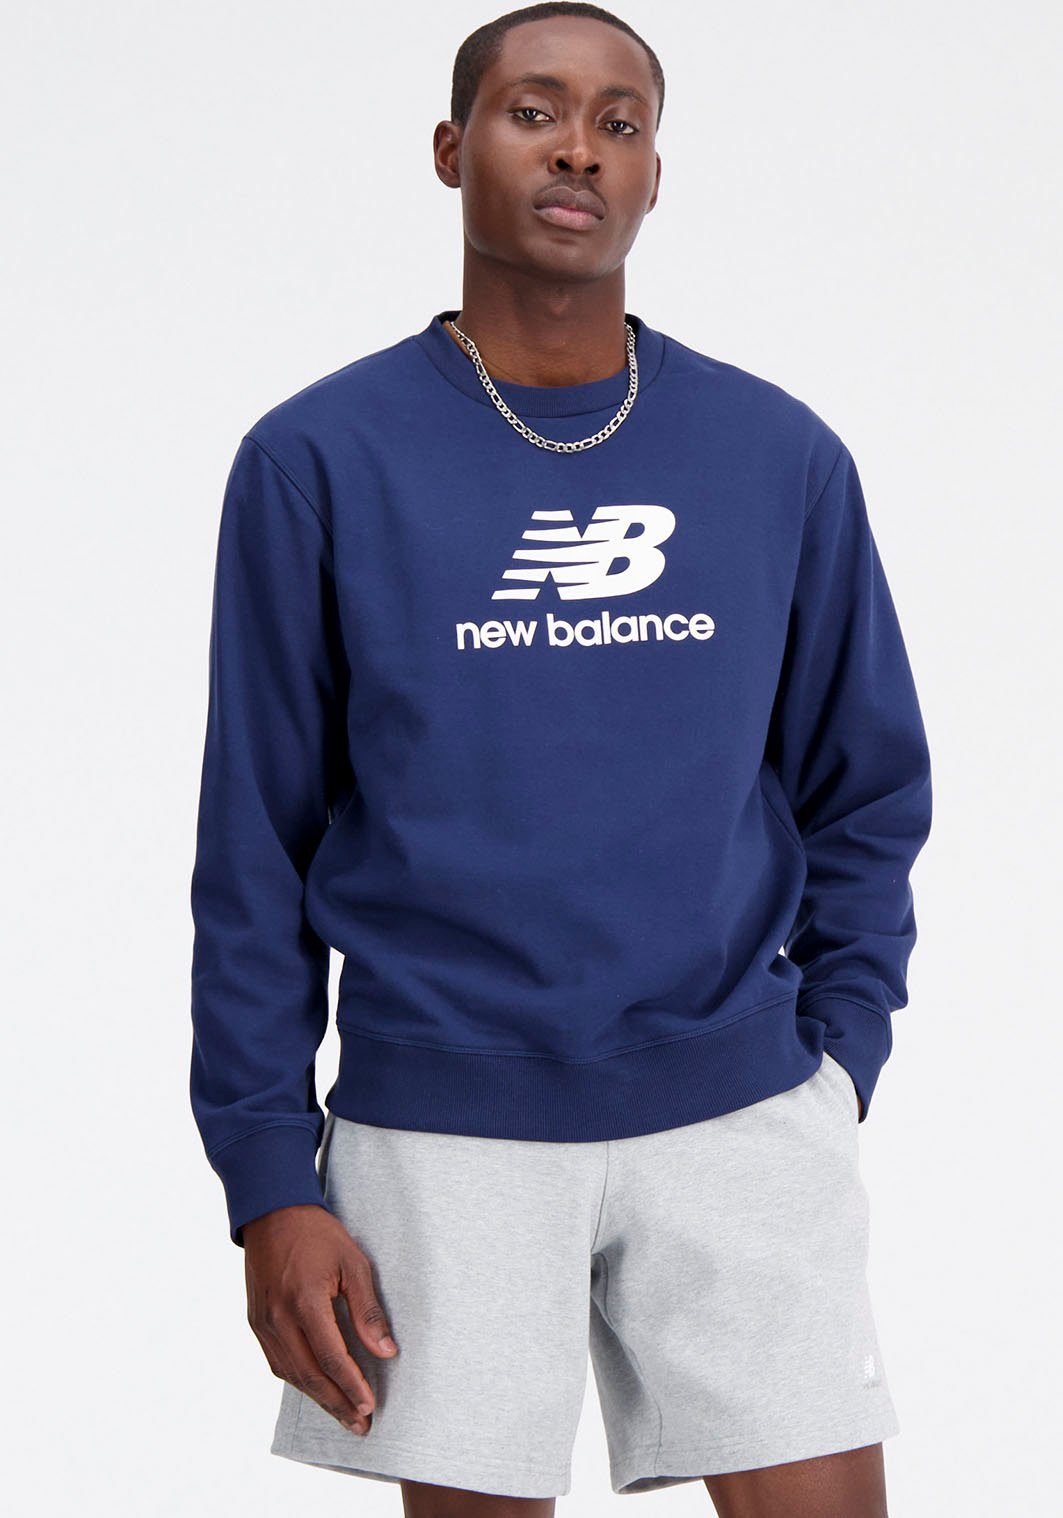 NB Balance STACKED nav CREW Sweatshirt ESSENTIALS nb LOGO New FLEECE